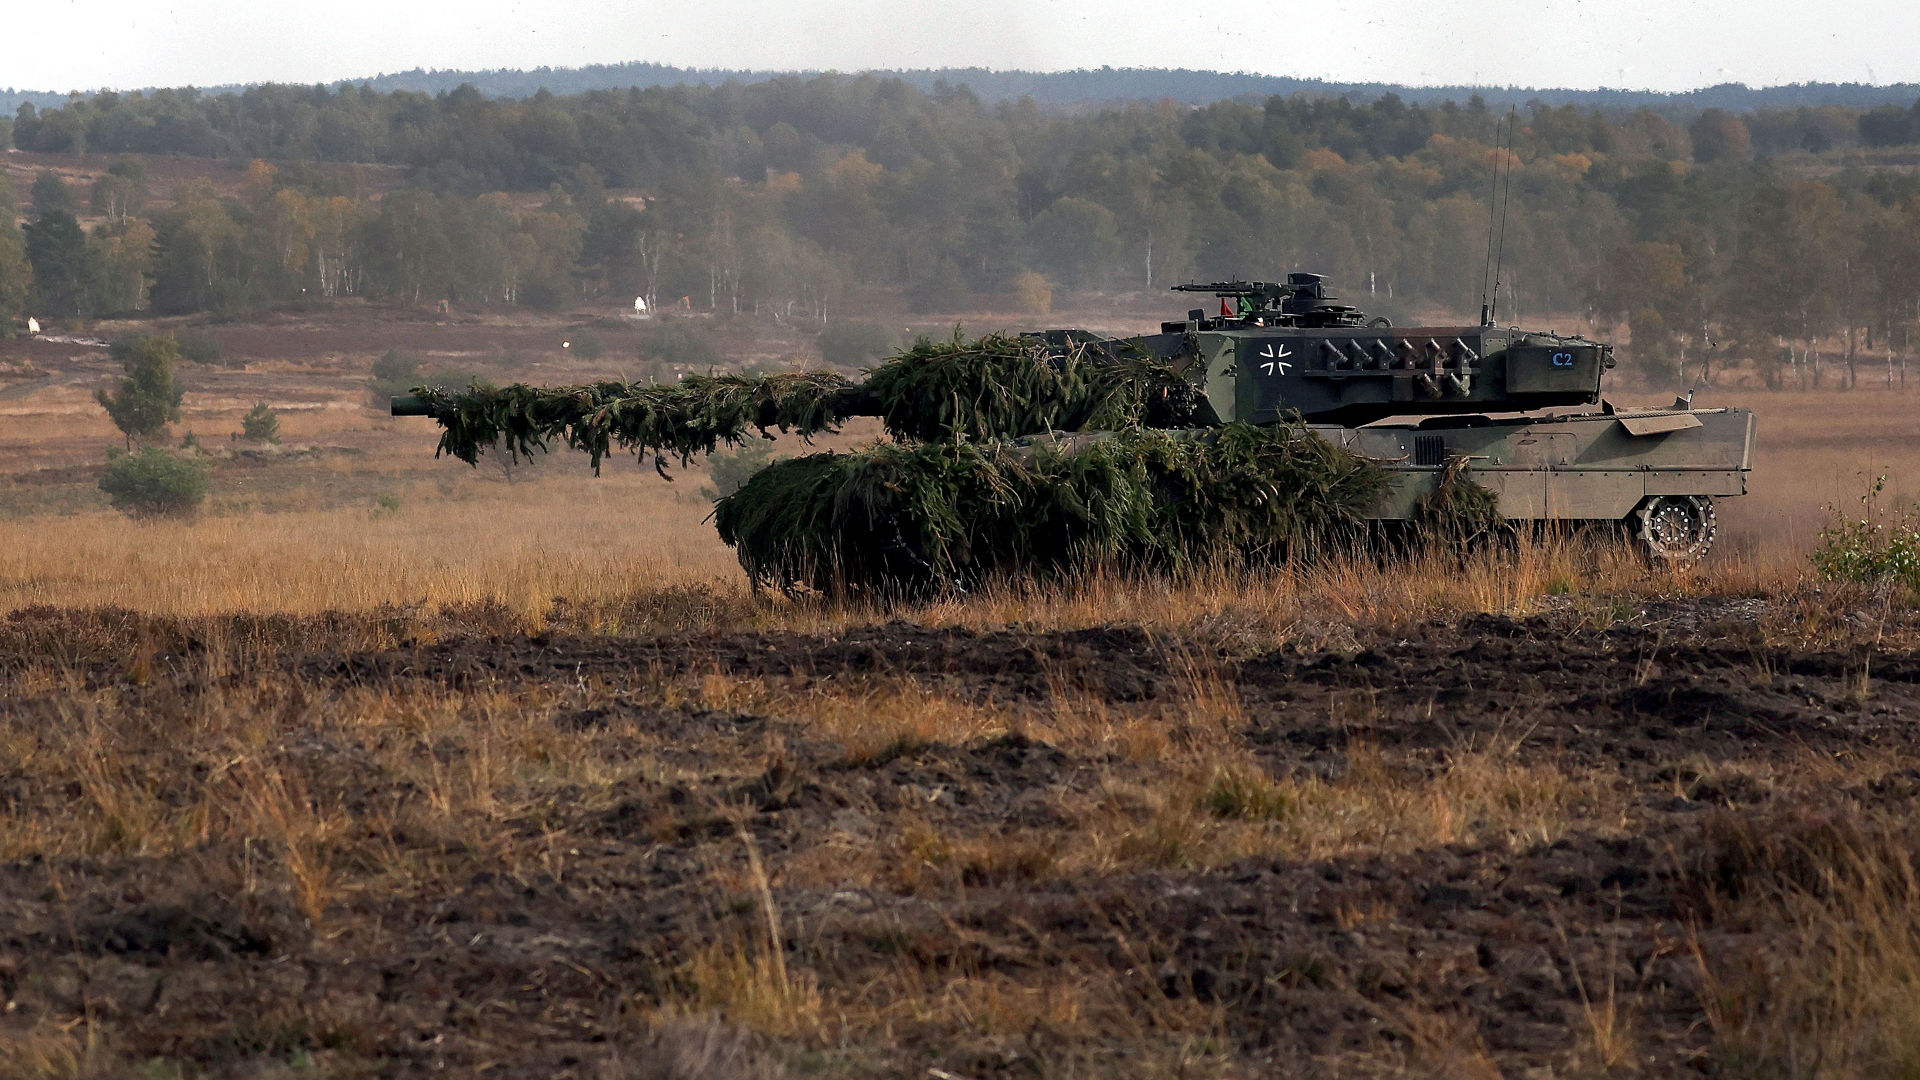 Char Leopard 2